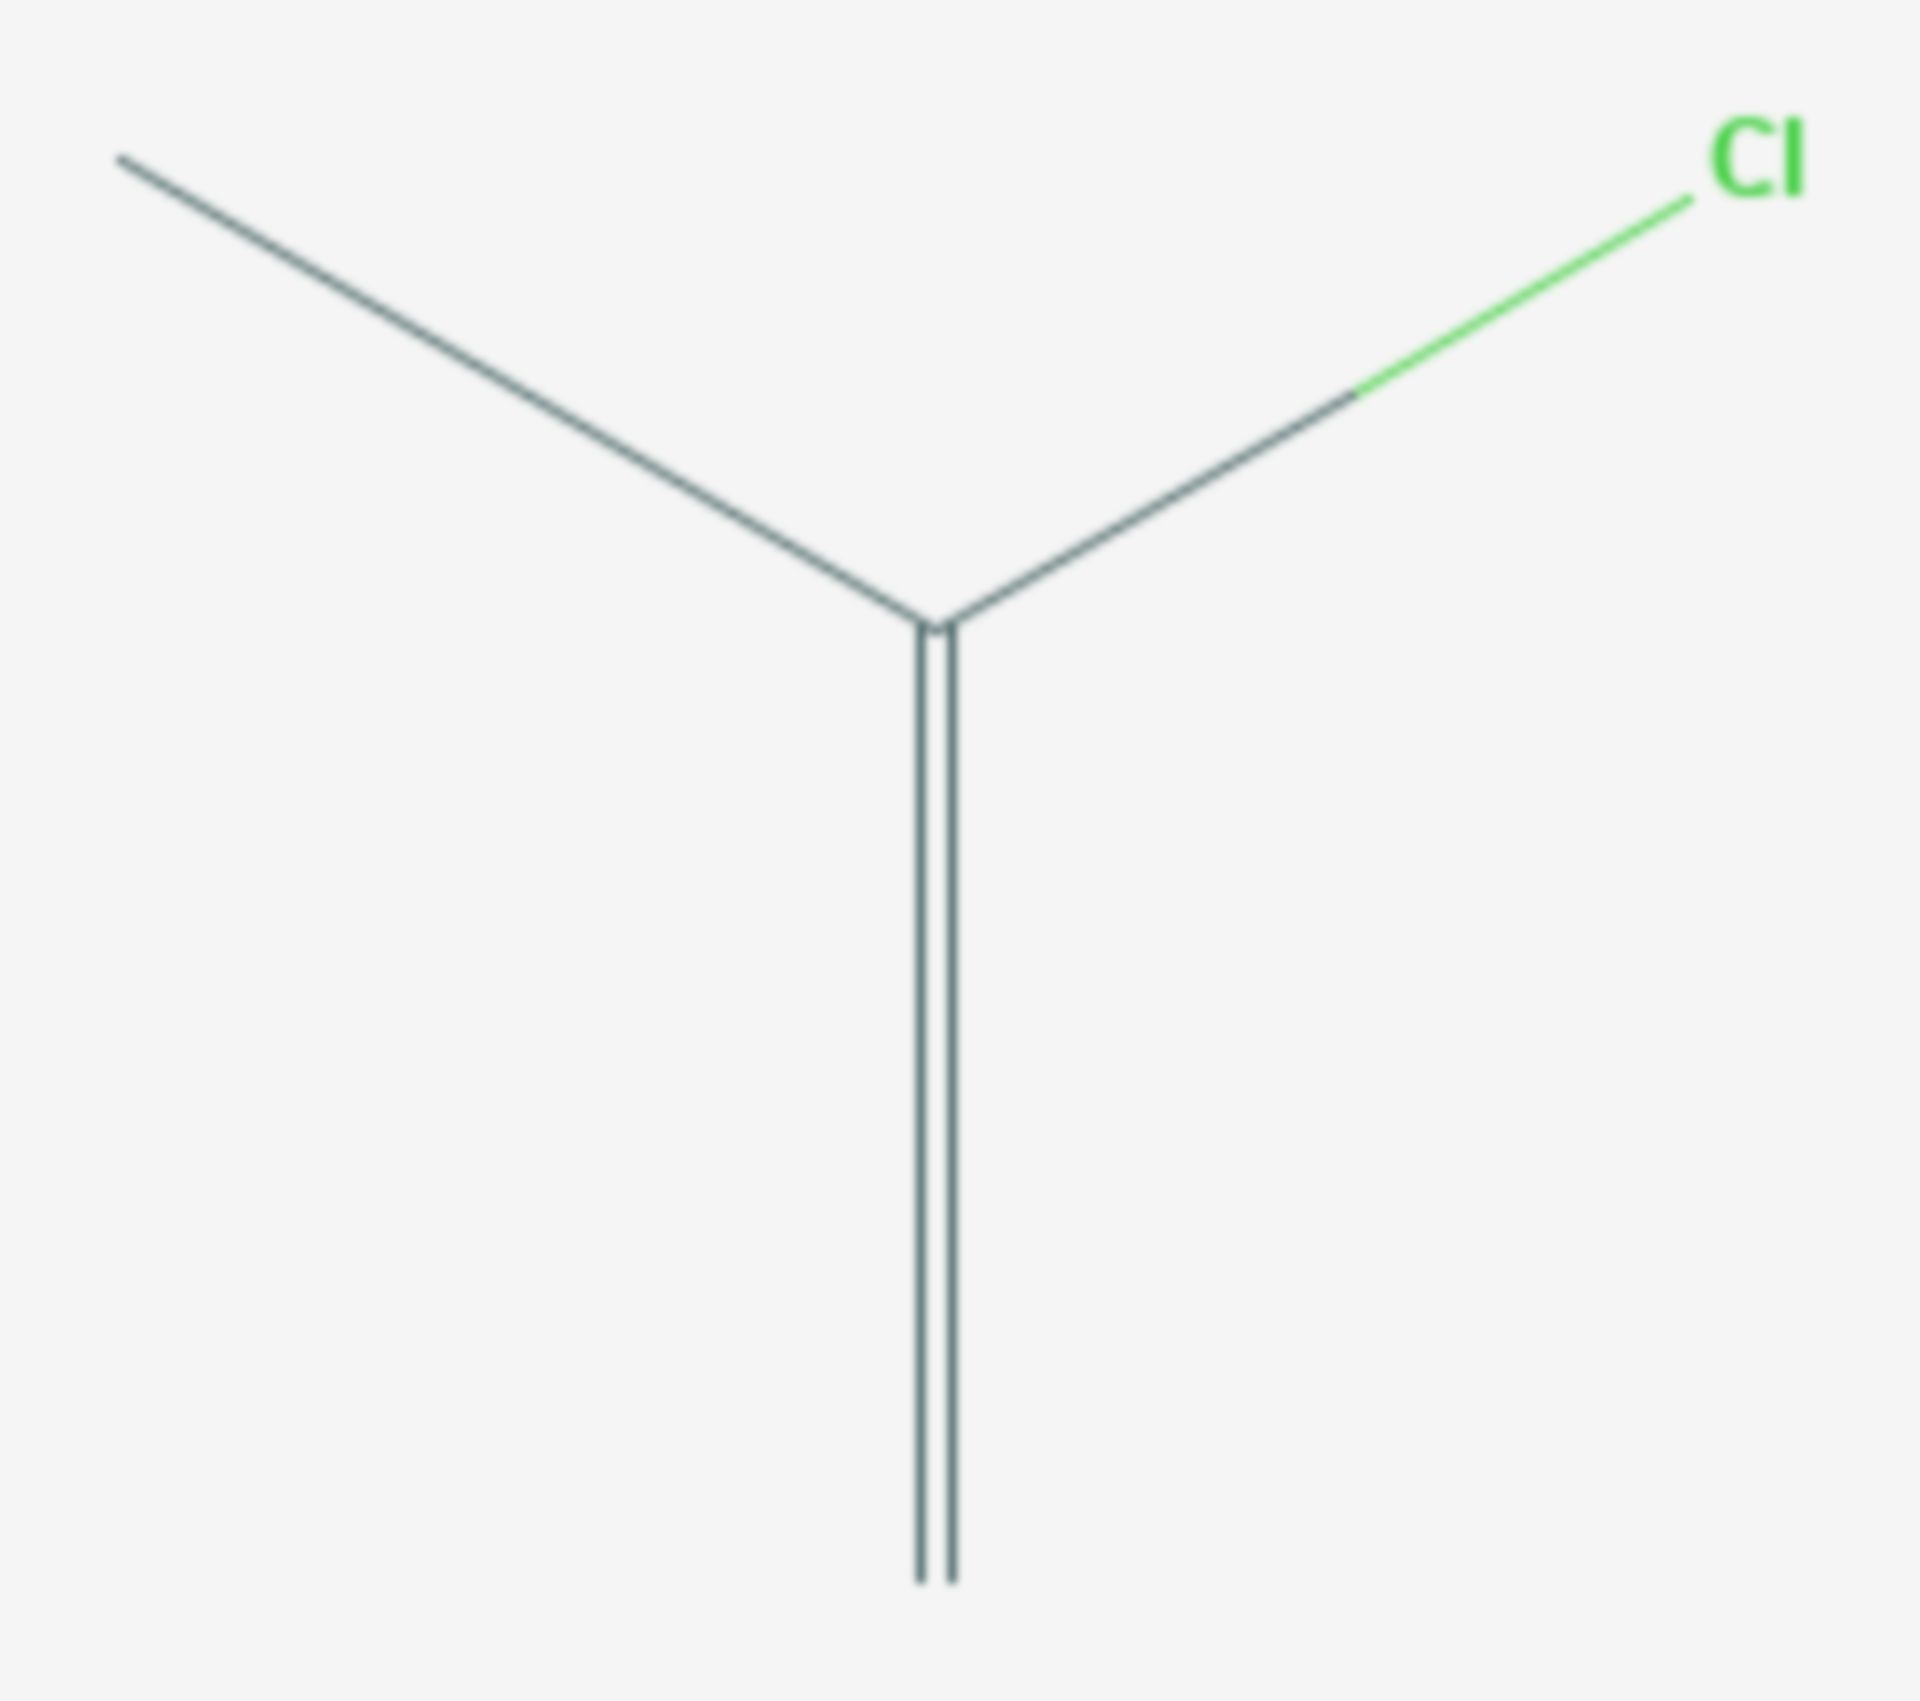 2-Chlorpropen (Strukturformel)